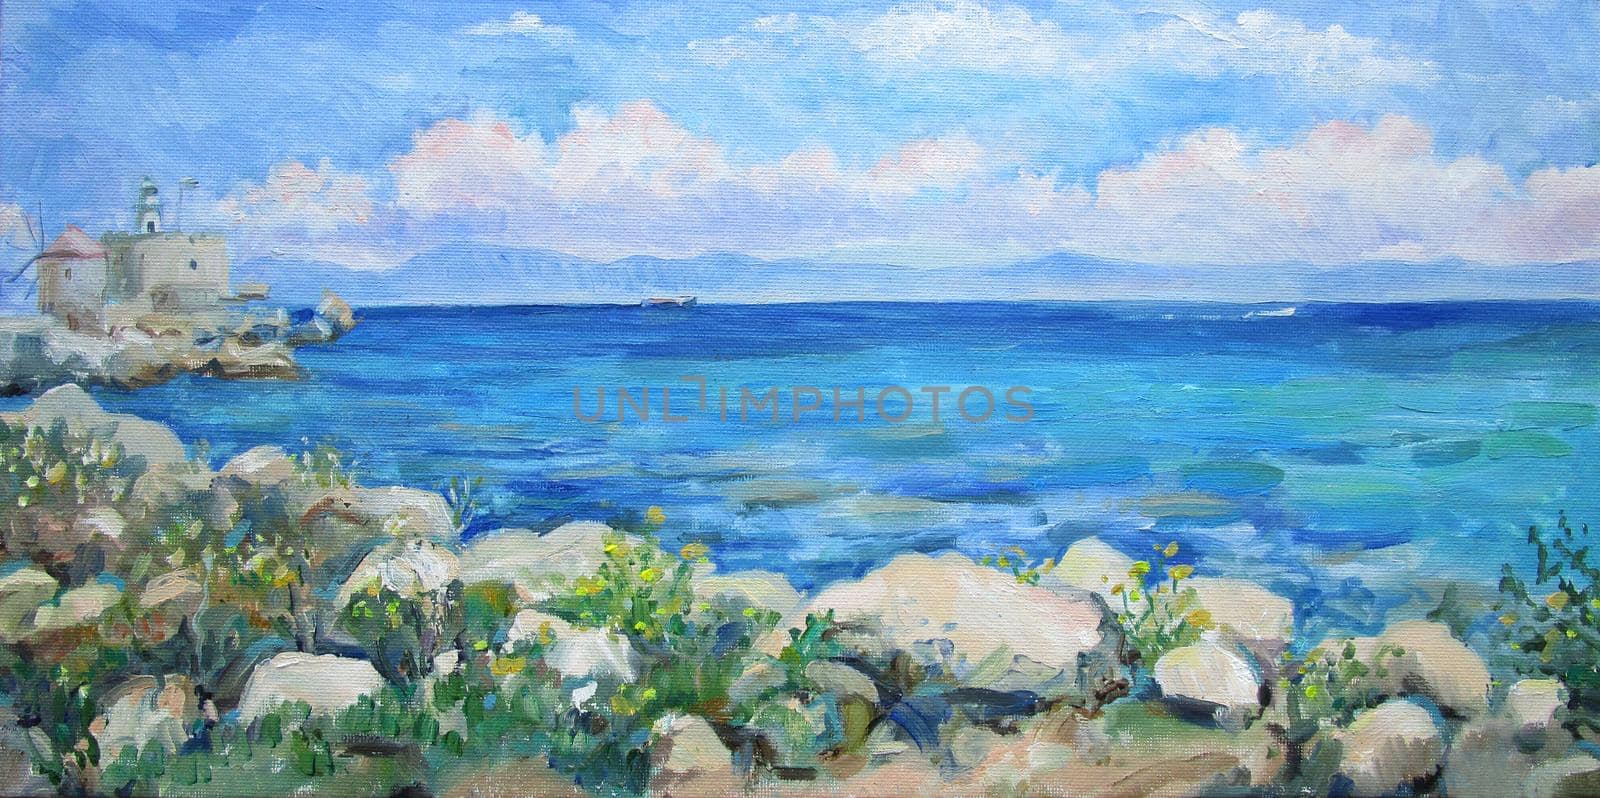 mediterranean sea near the island of rhodes. High quality illustration